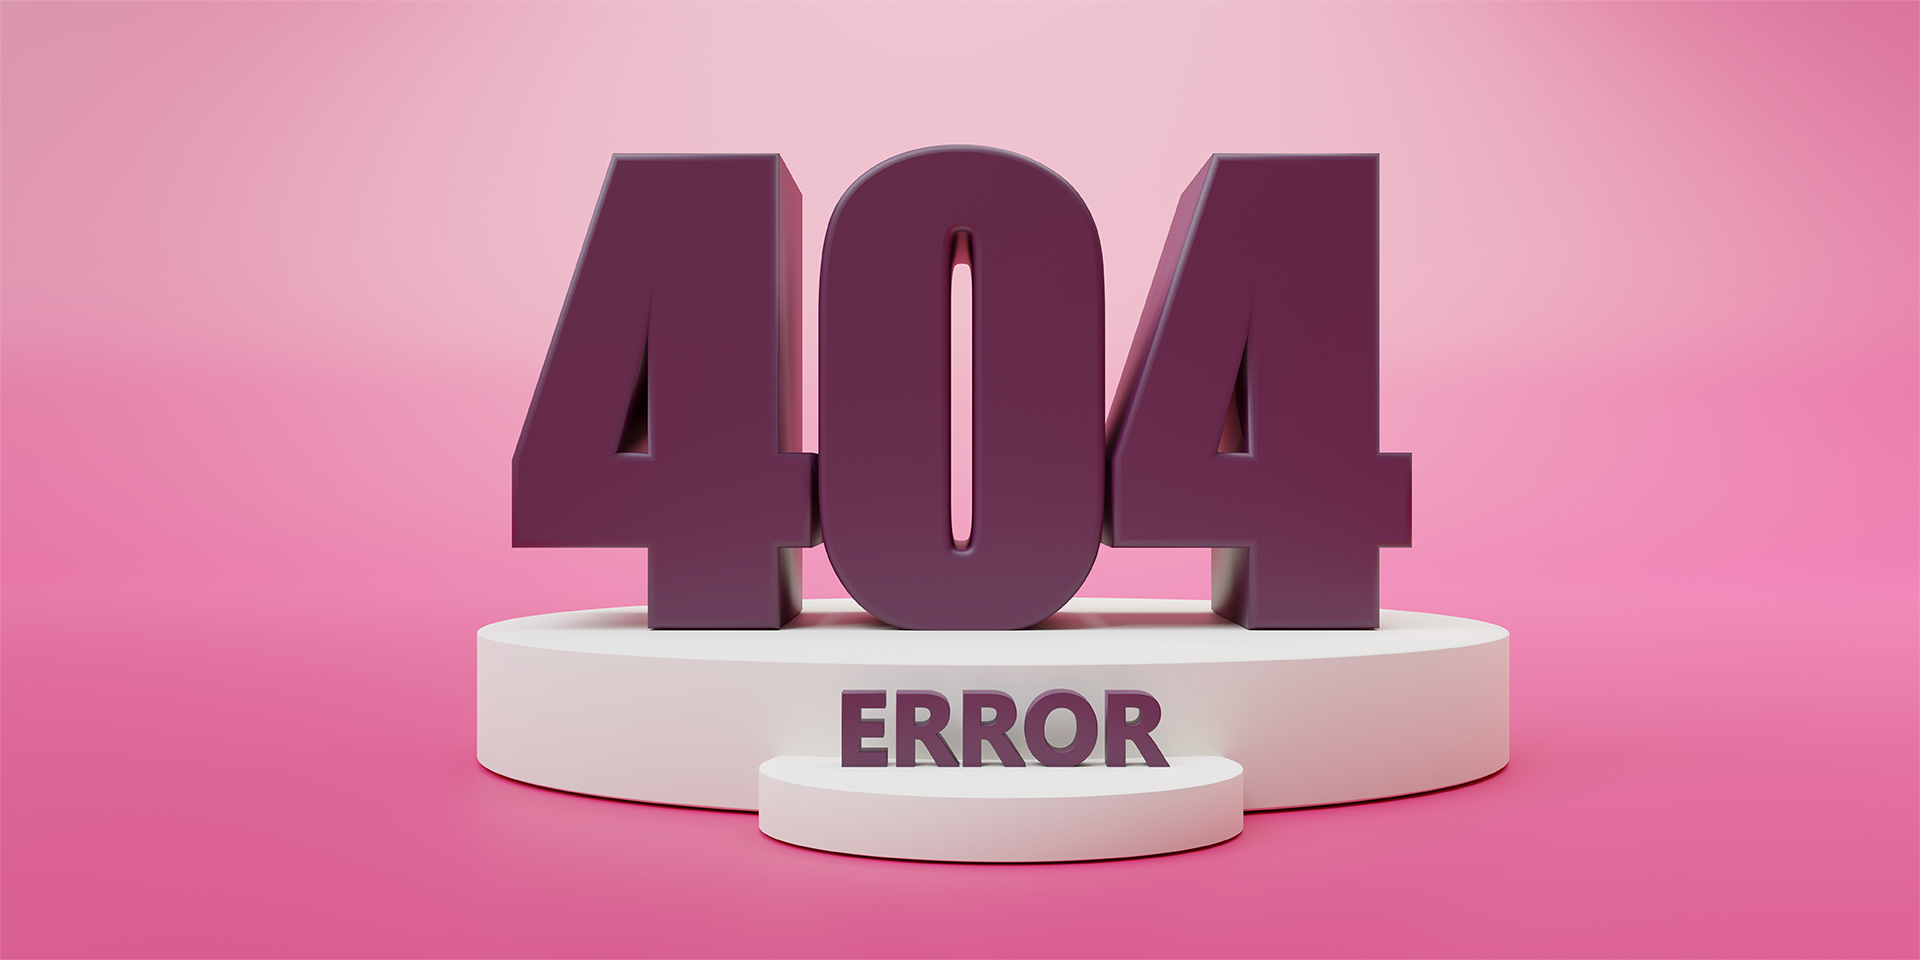 404 Error on a pink background